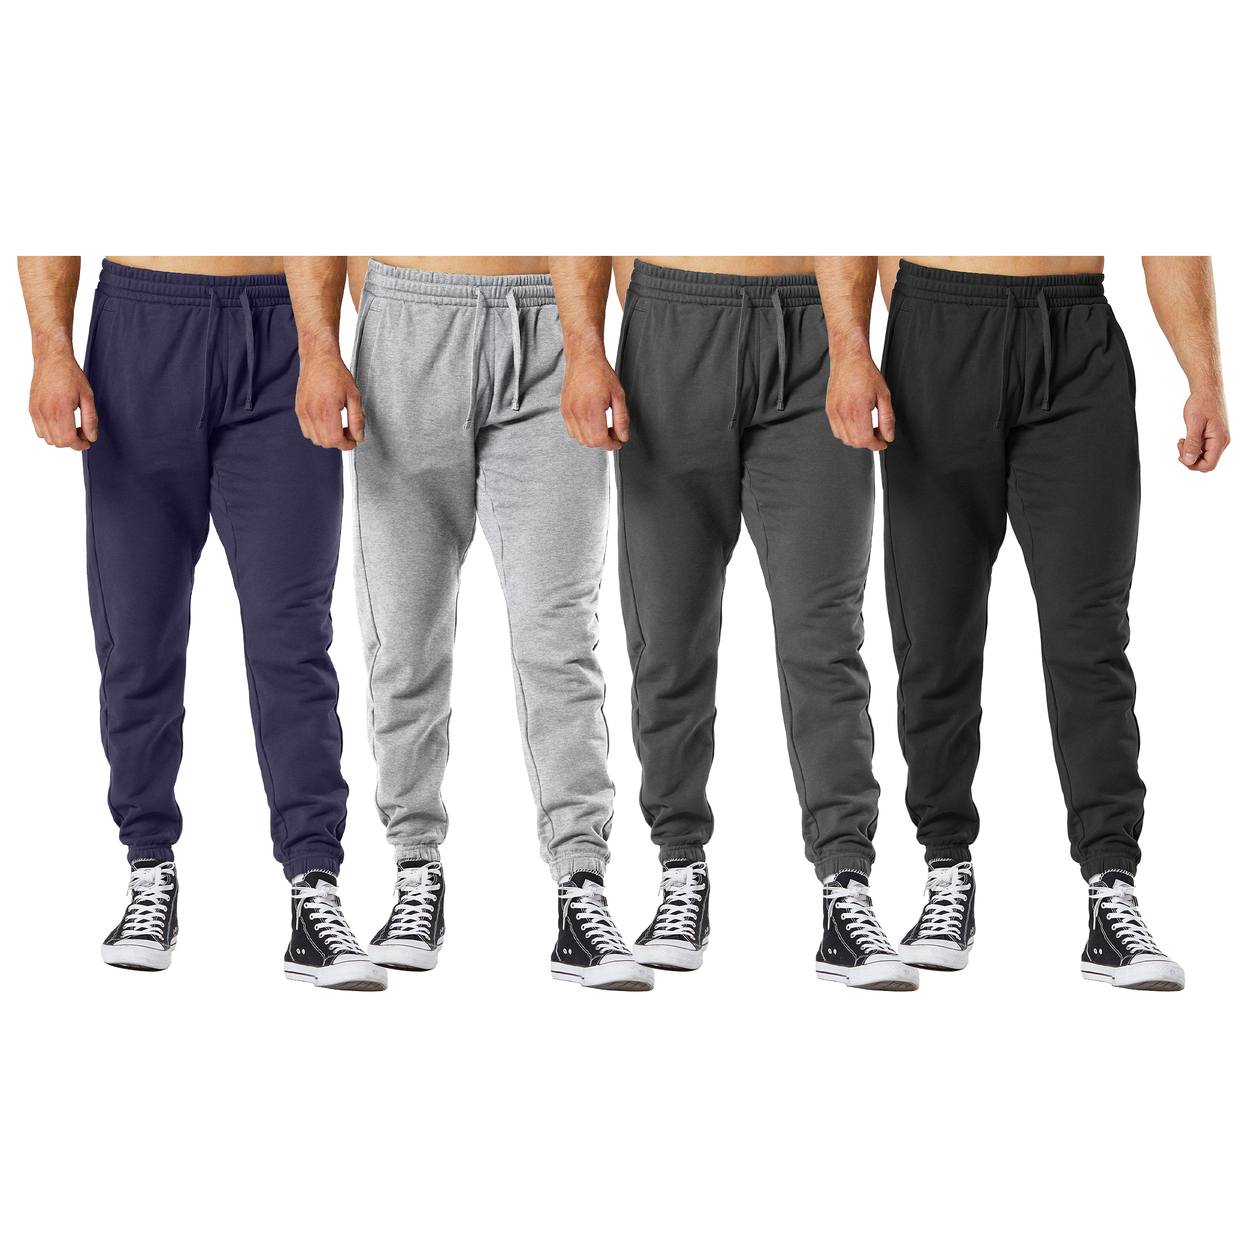 Men's Ultra-Soft Cozy Winter Warm Casual Fleece Lined Sweatpants Jogger - Charcoal, Large